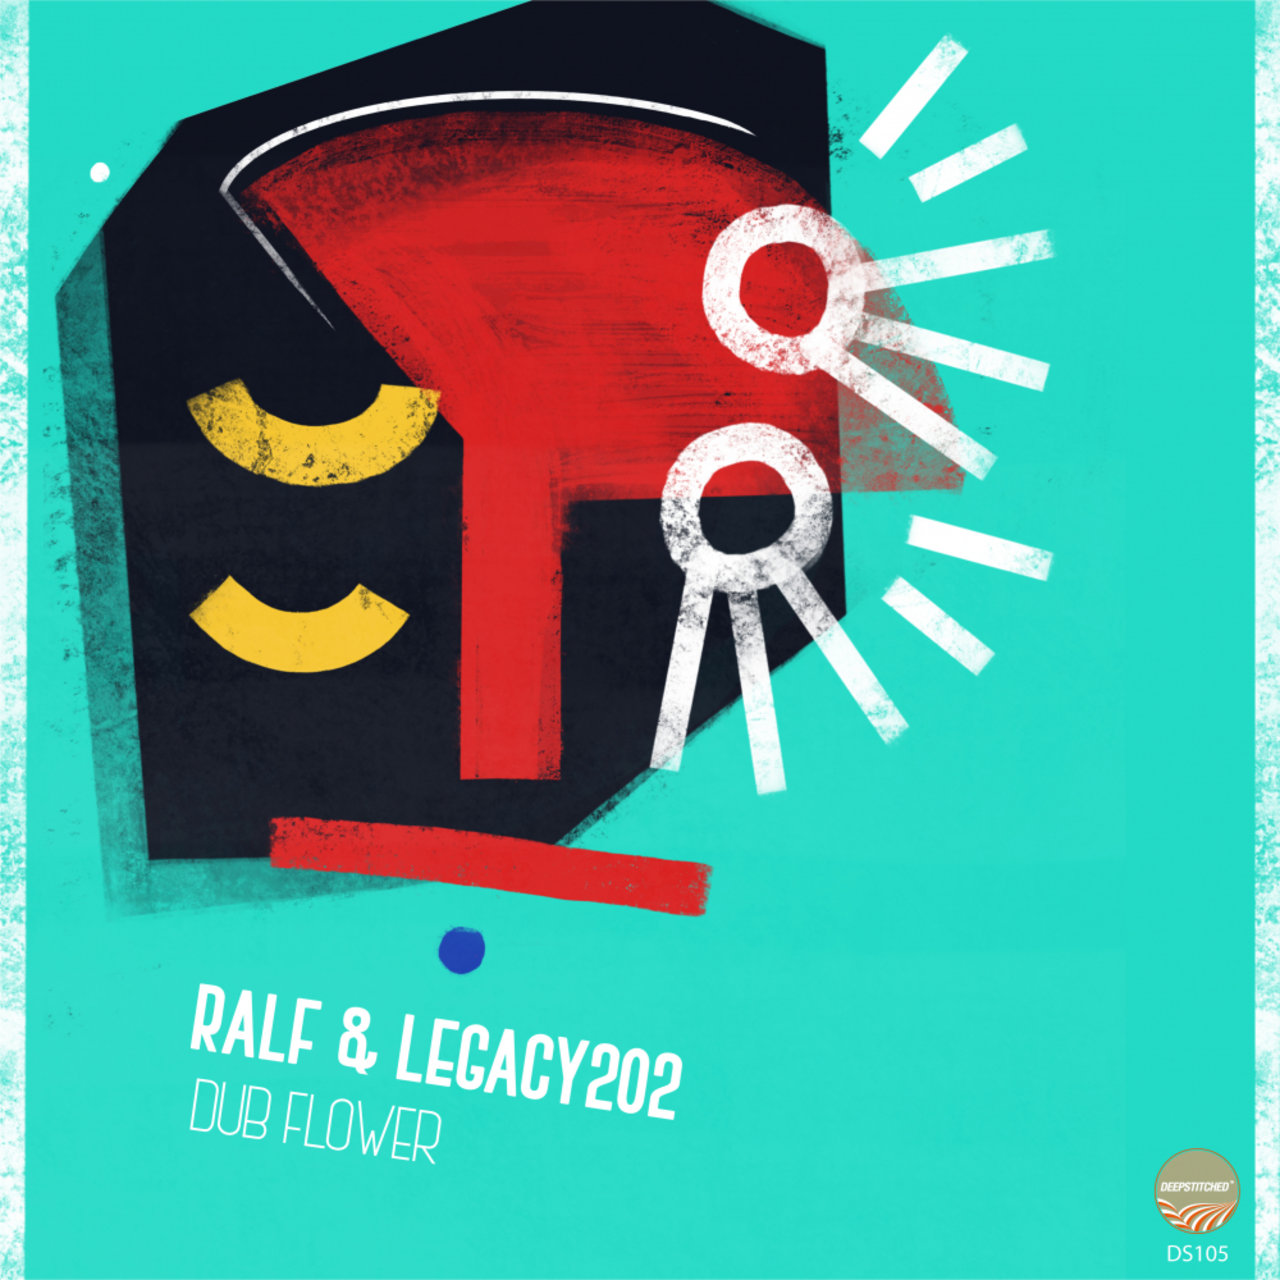 Ralf & Legacy202 - Dub Flower [DS105]